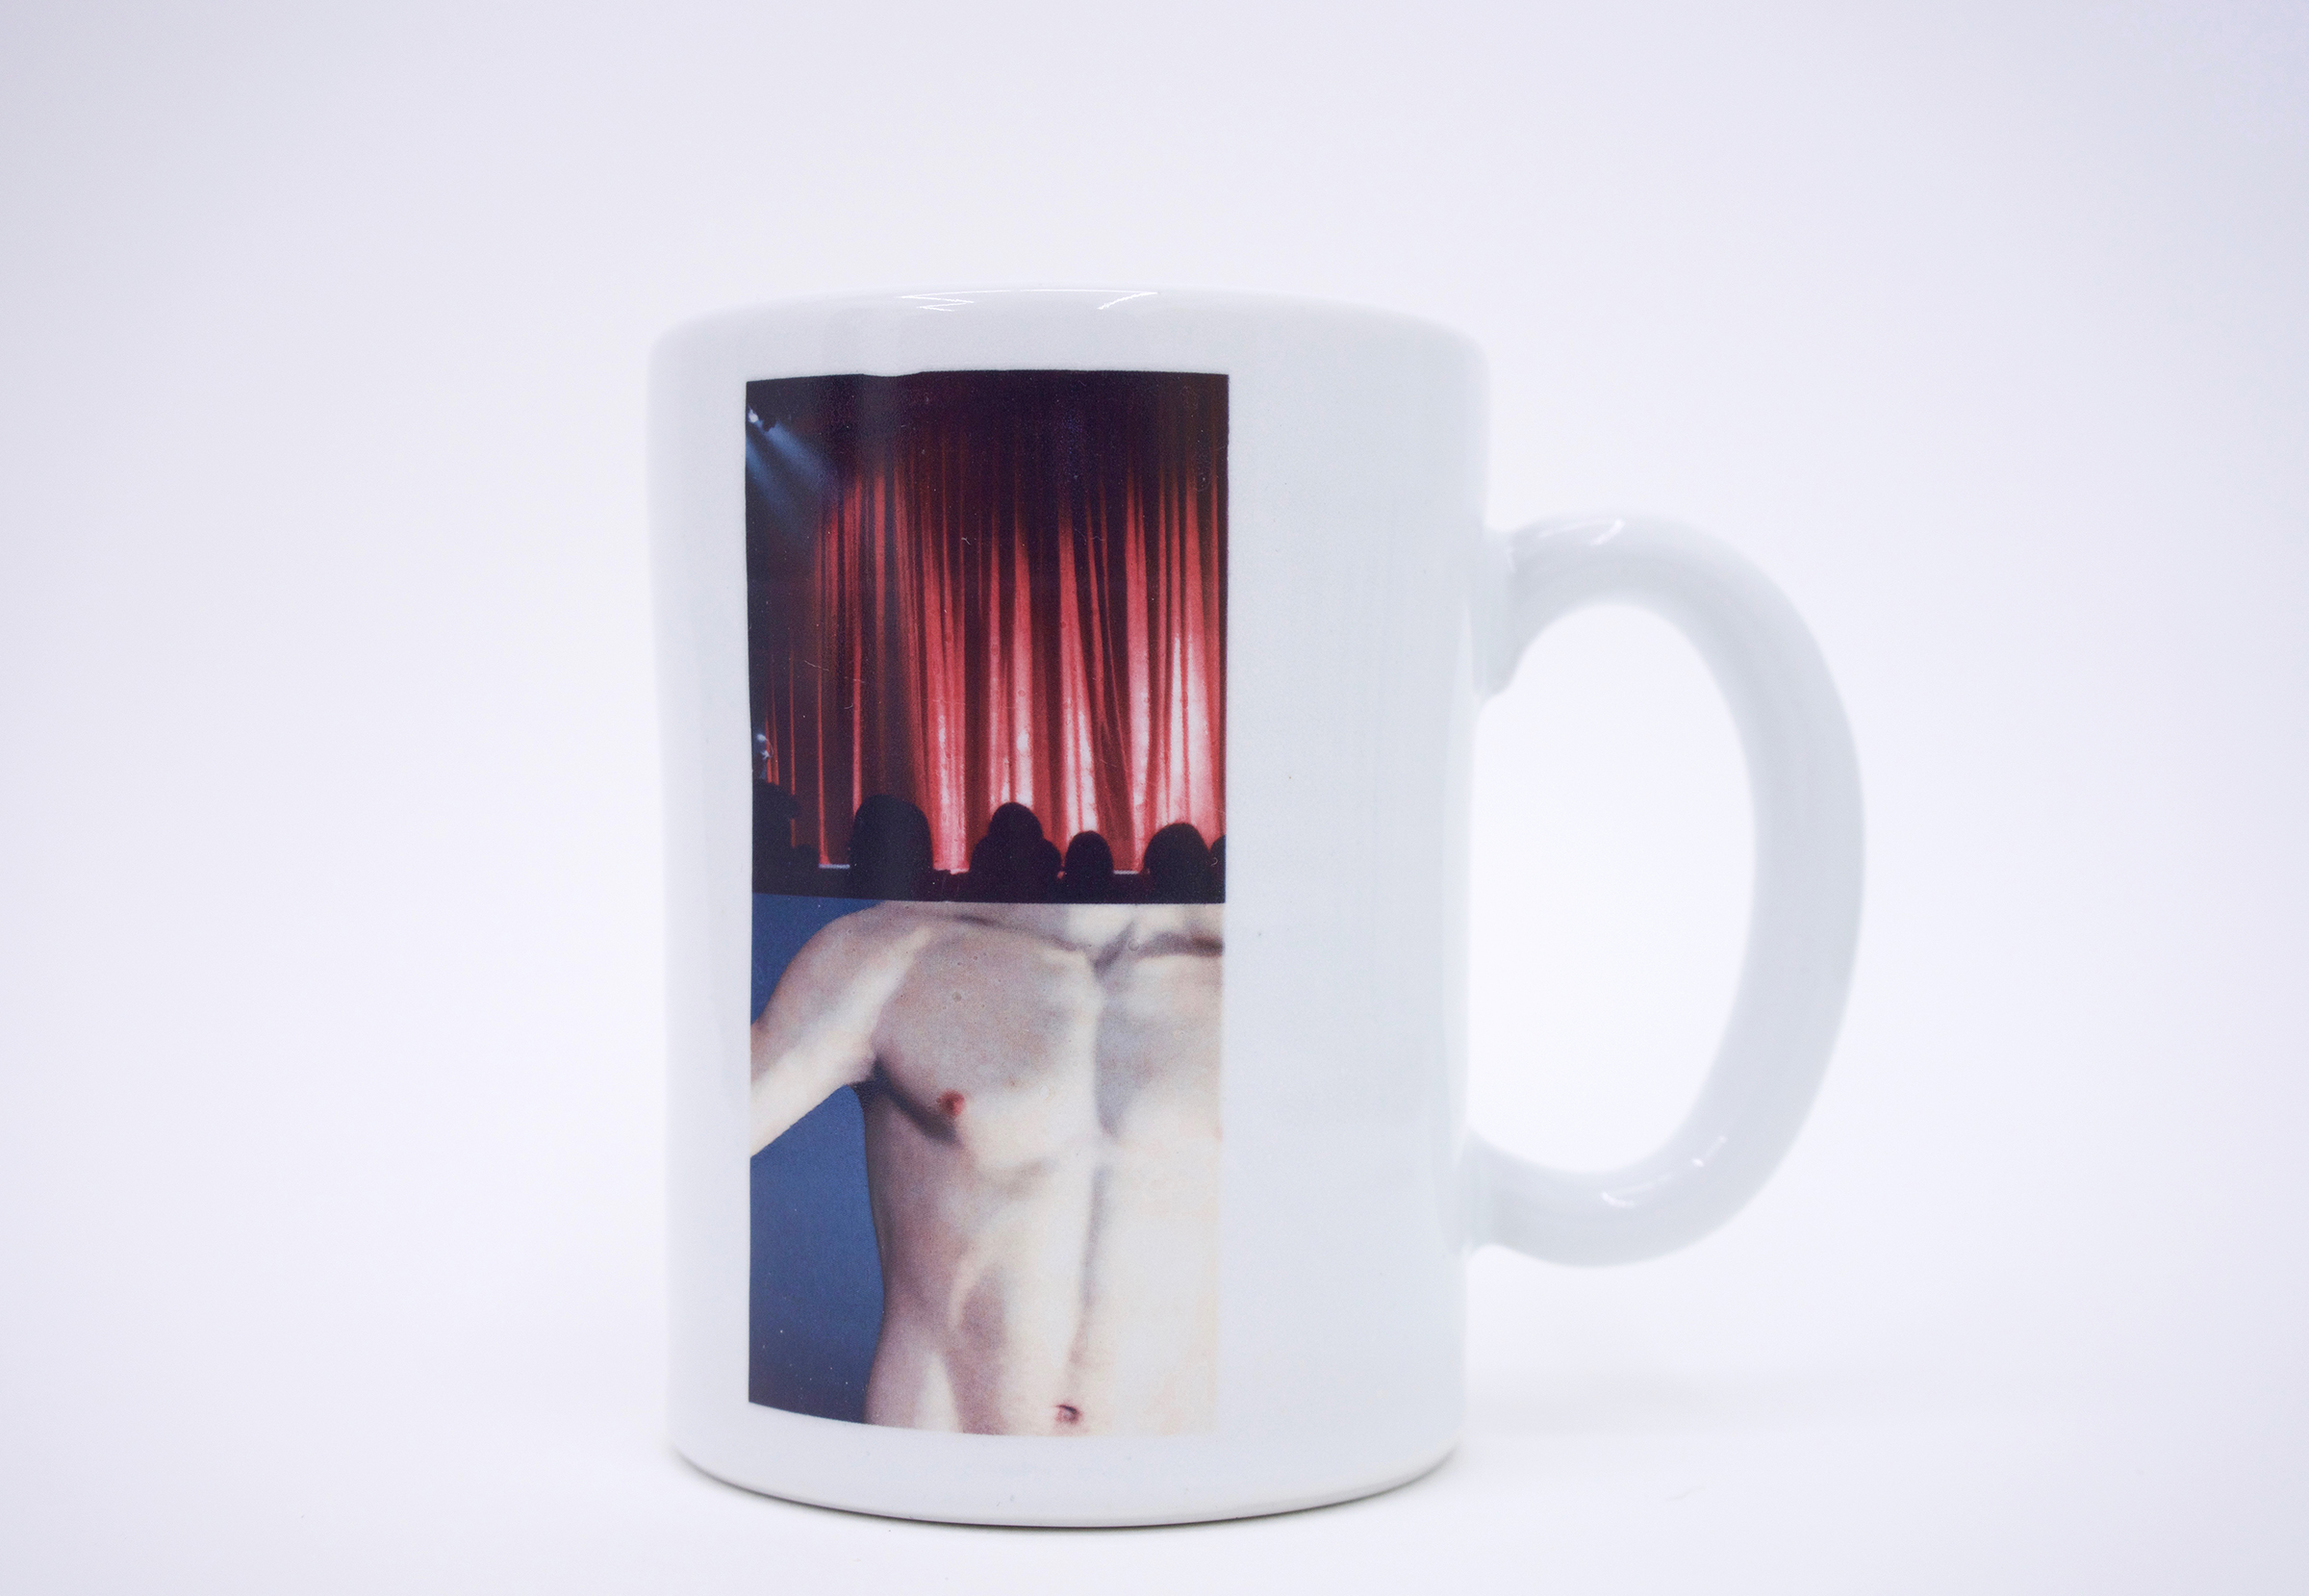  Erik Scollon (Shelf #1 detail) Mug 1:  ”rapid passage through varide ambiance,”  2018 porcelain, glaze, ceramic decal 